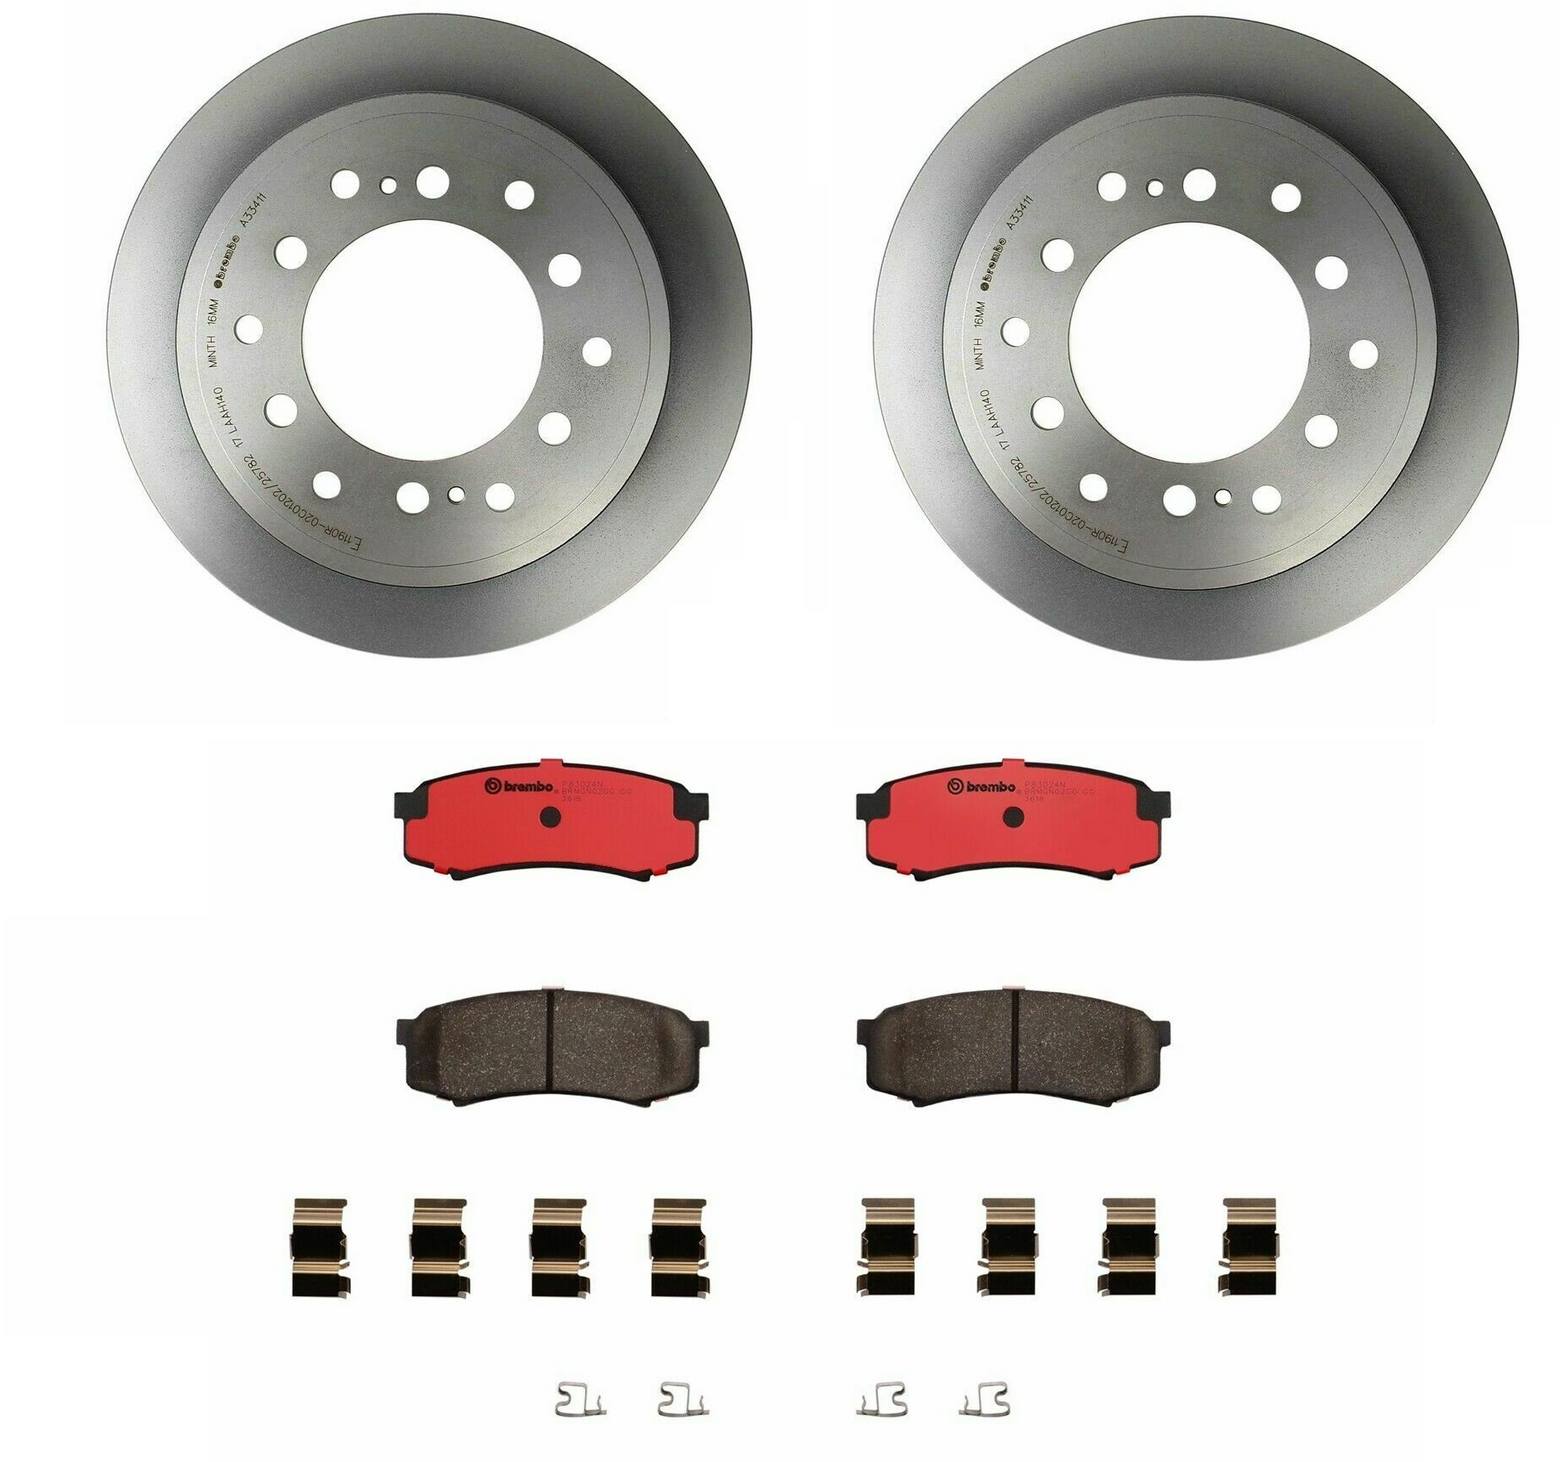 Toyota Lexus Disc Brake Pad and Rotor Kit - Rear (312mm) (Ceramic) Brembo